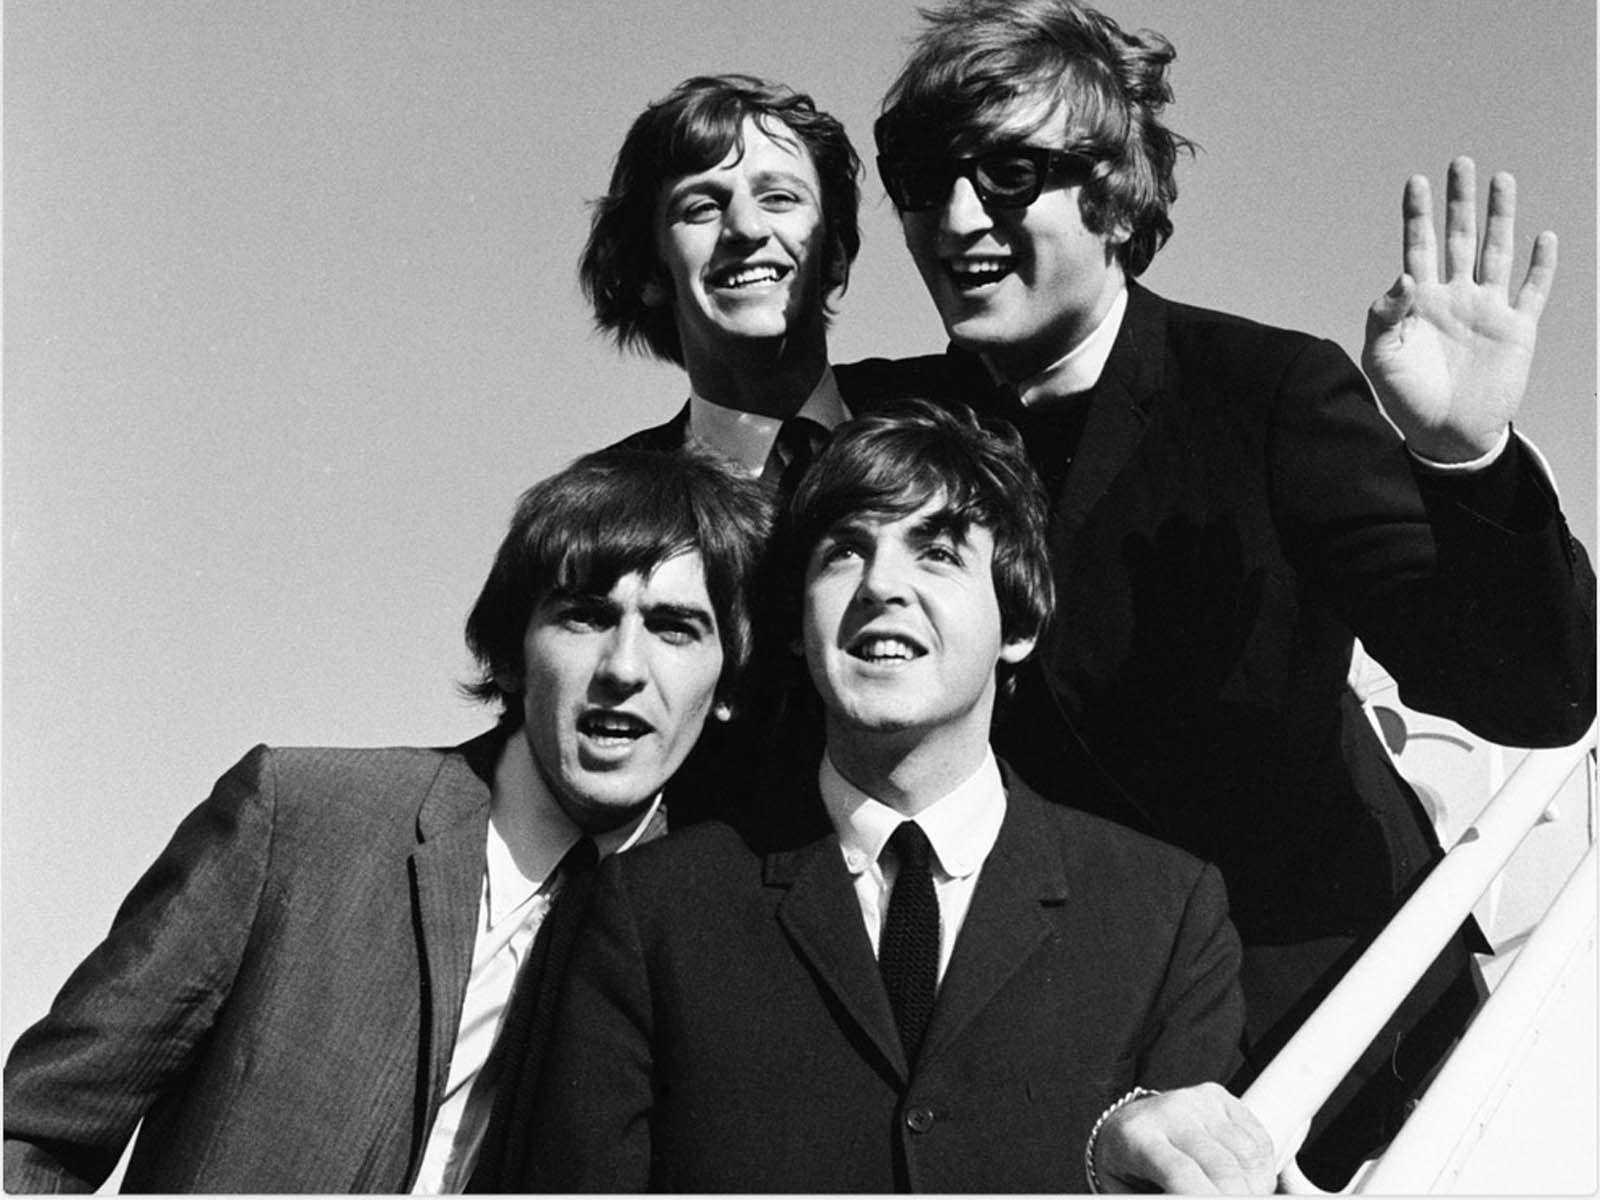 The Image of The Beatles John Lennon George Harrison Ringo Starr